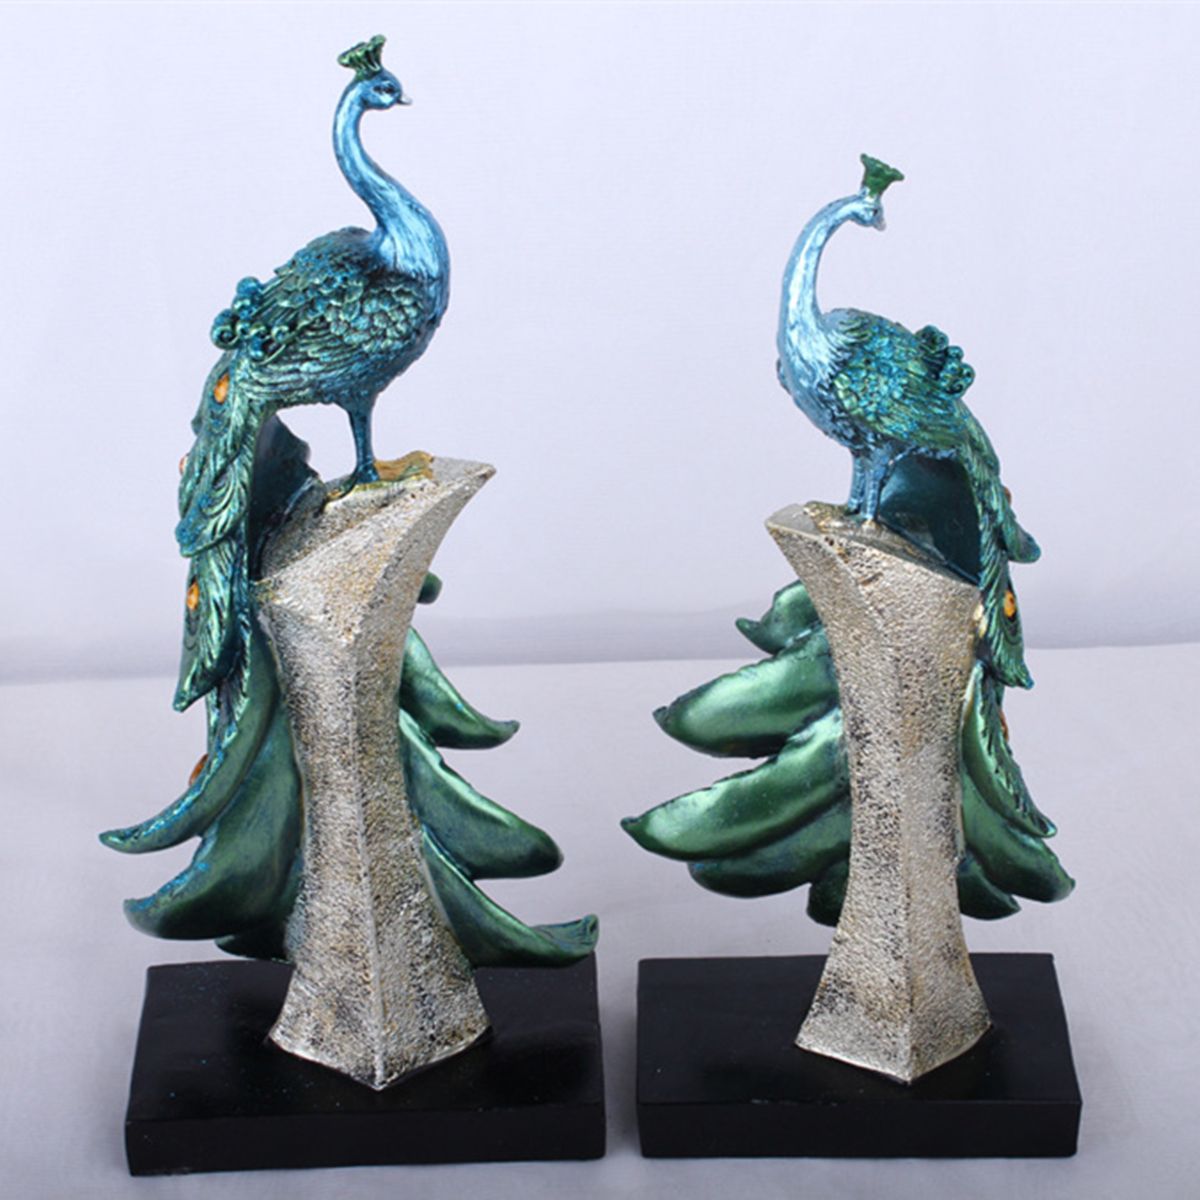 Peacock-Resin-Desktop-Ornament-Animal-Figurine-Statue-Home-Decorations-Crafts-1478851